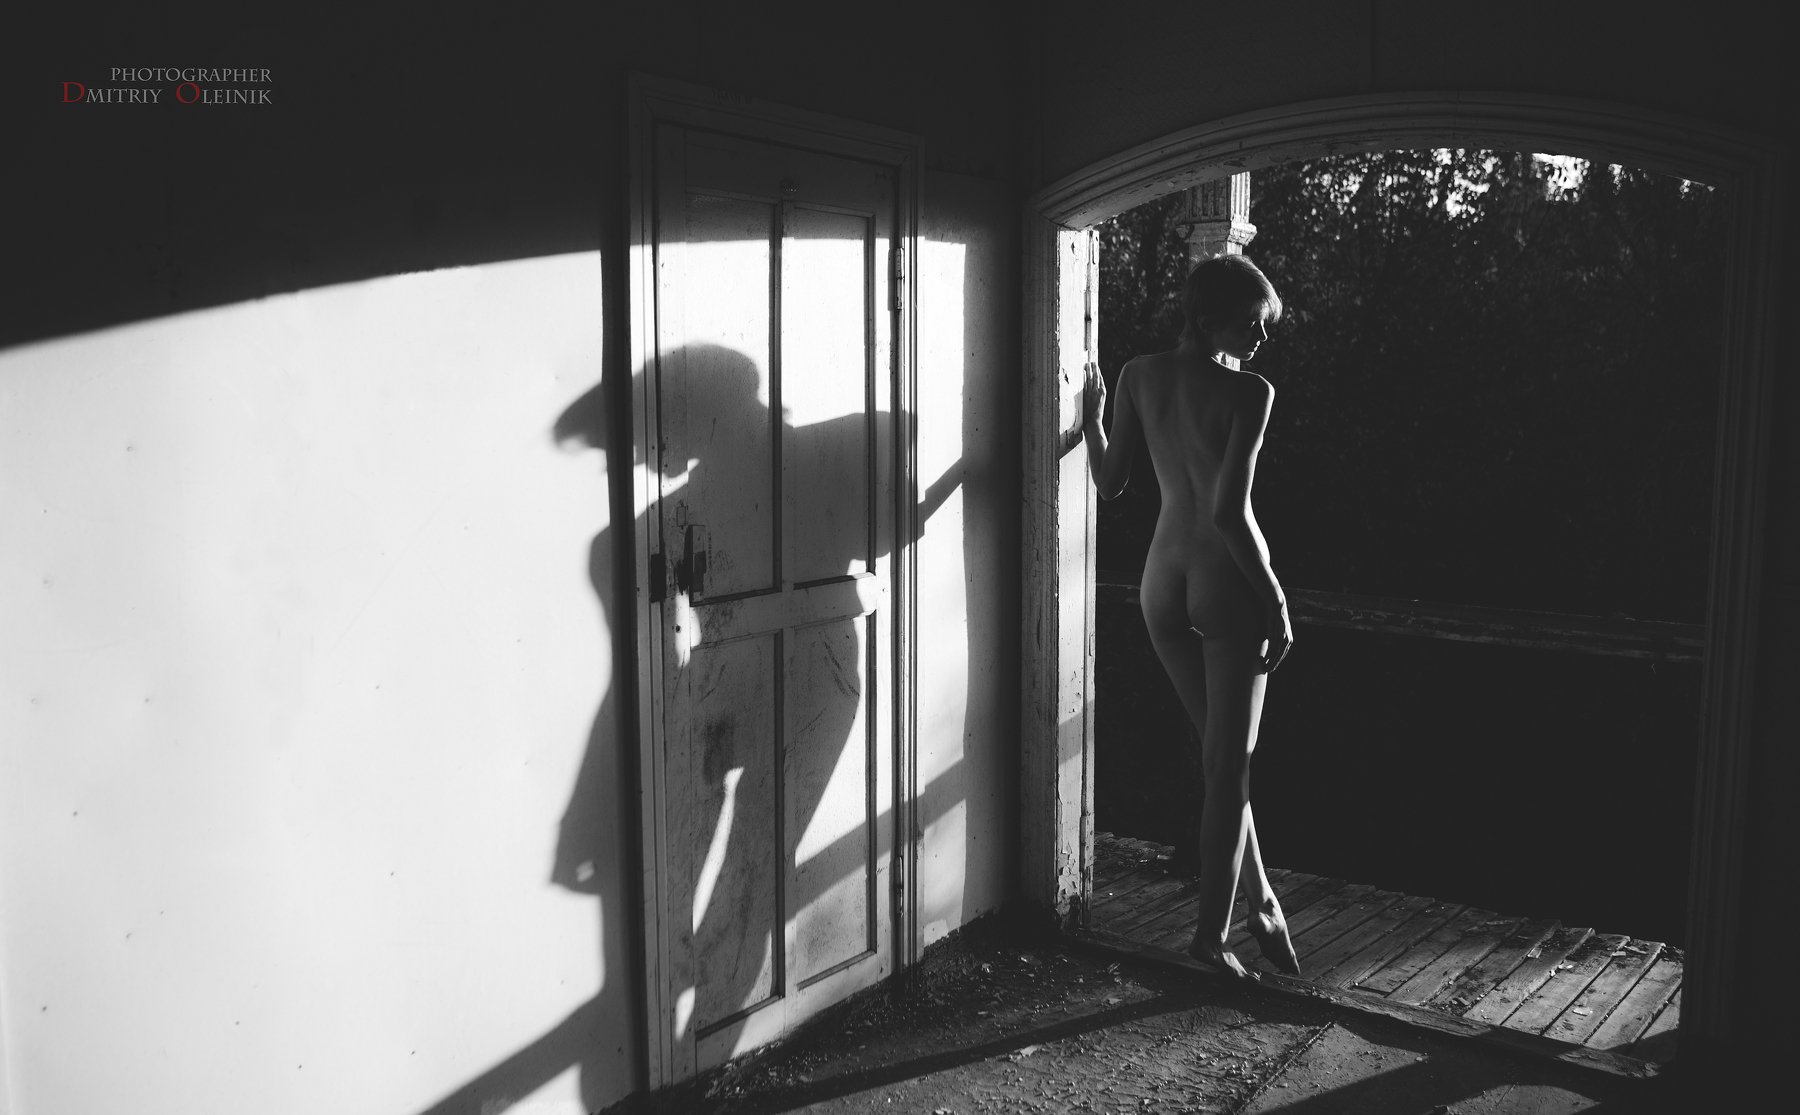 #nude #art #artnude #nudity #erotic #woman #girl #photography #photographer #ню #эротика #фотография #топлес, Дмитрий